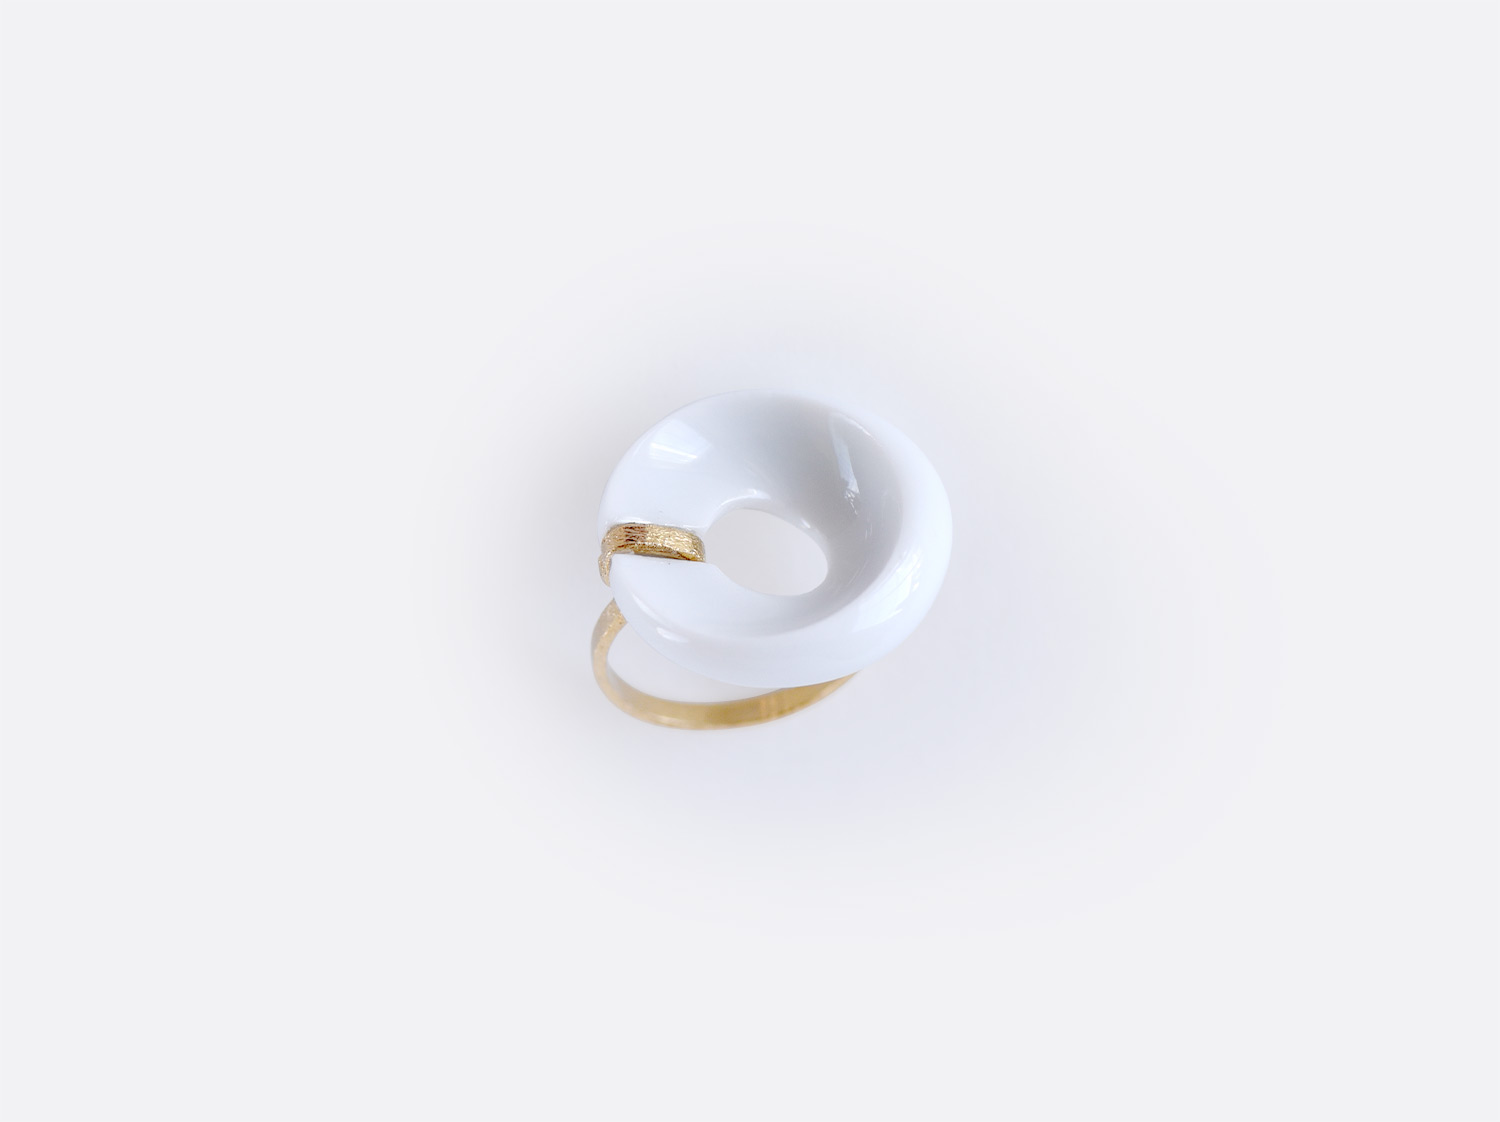 China Alba blanc Ring of the collection ALBA BLANC | Bernardaud